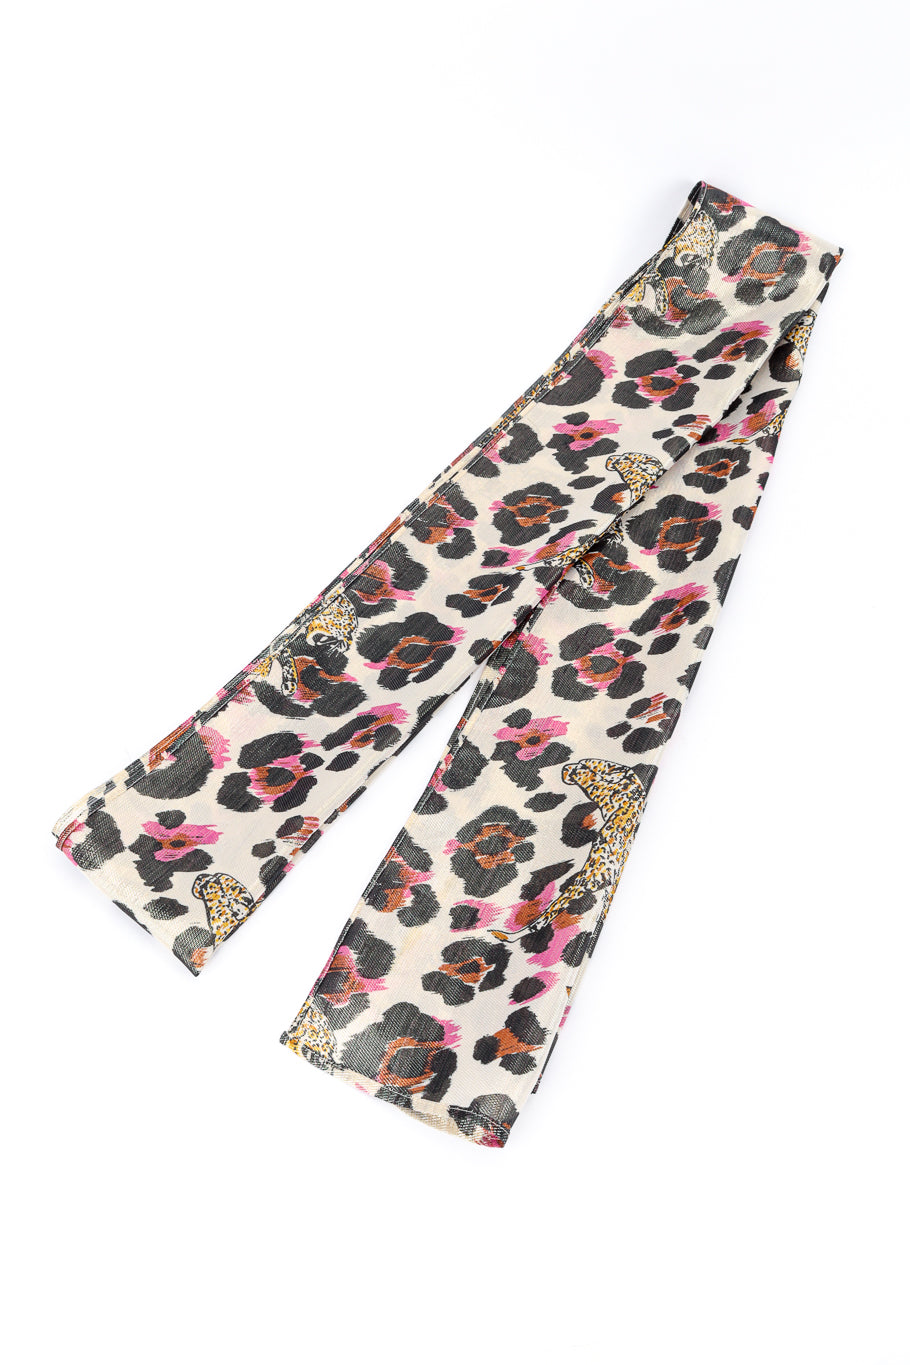 Vintage Diane Freis Metallic Animal Cheetah Dress sash @recess la